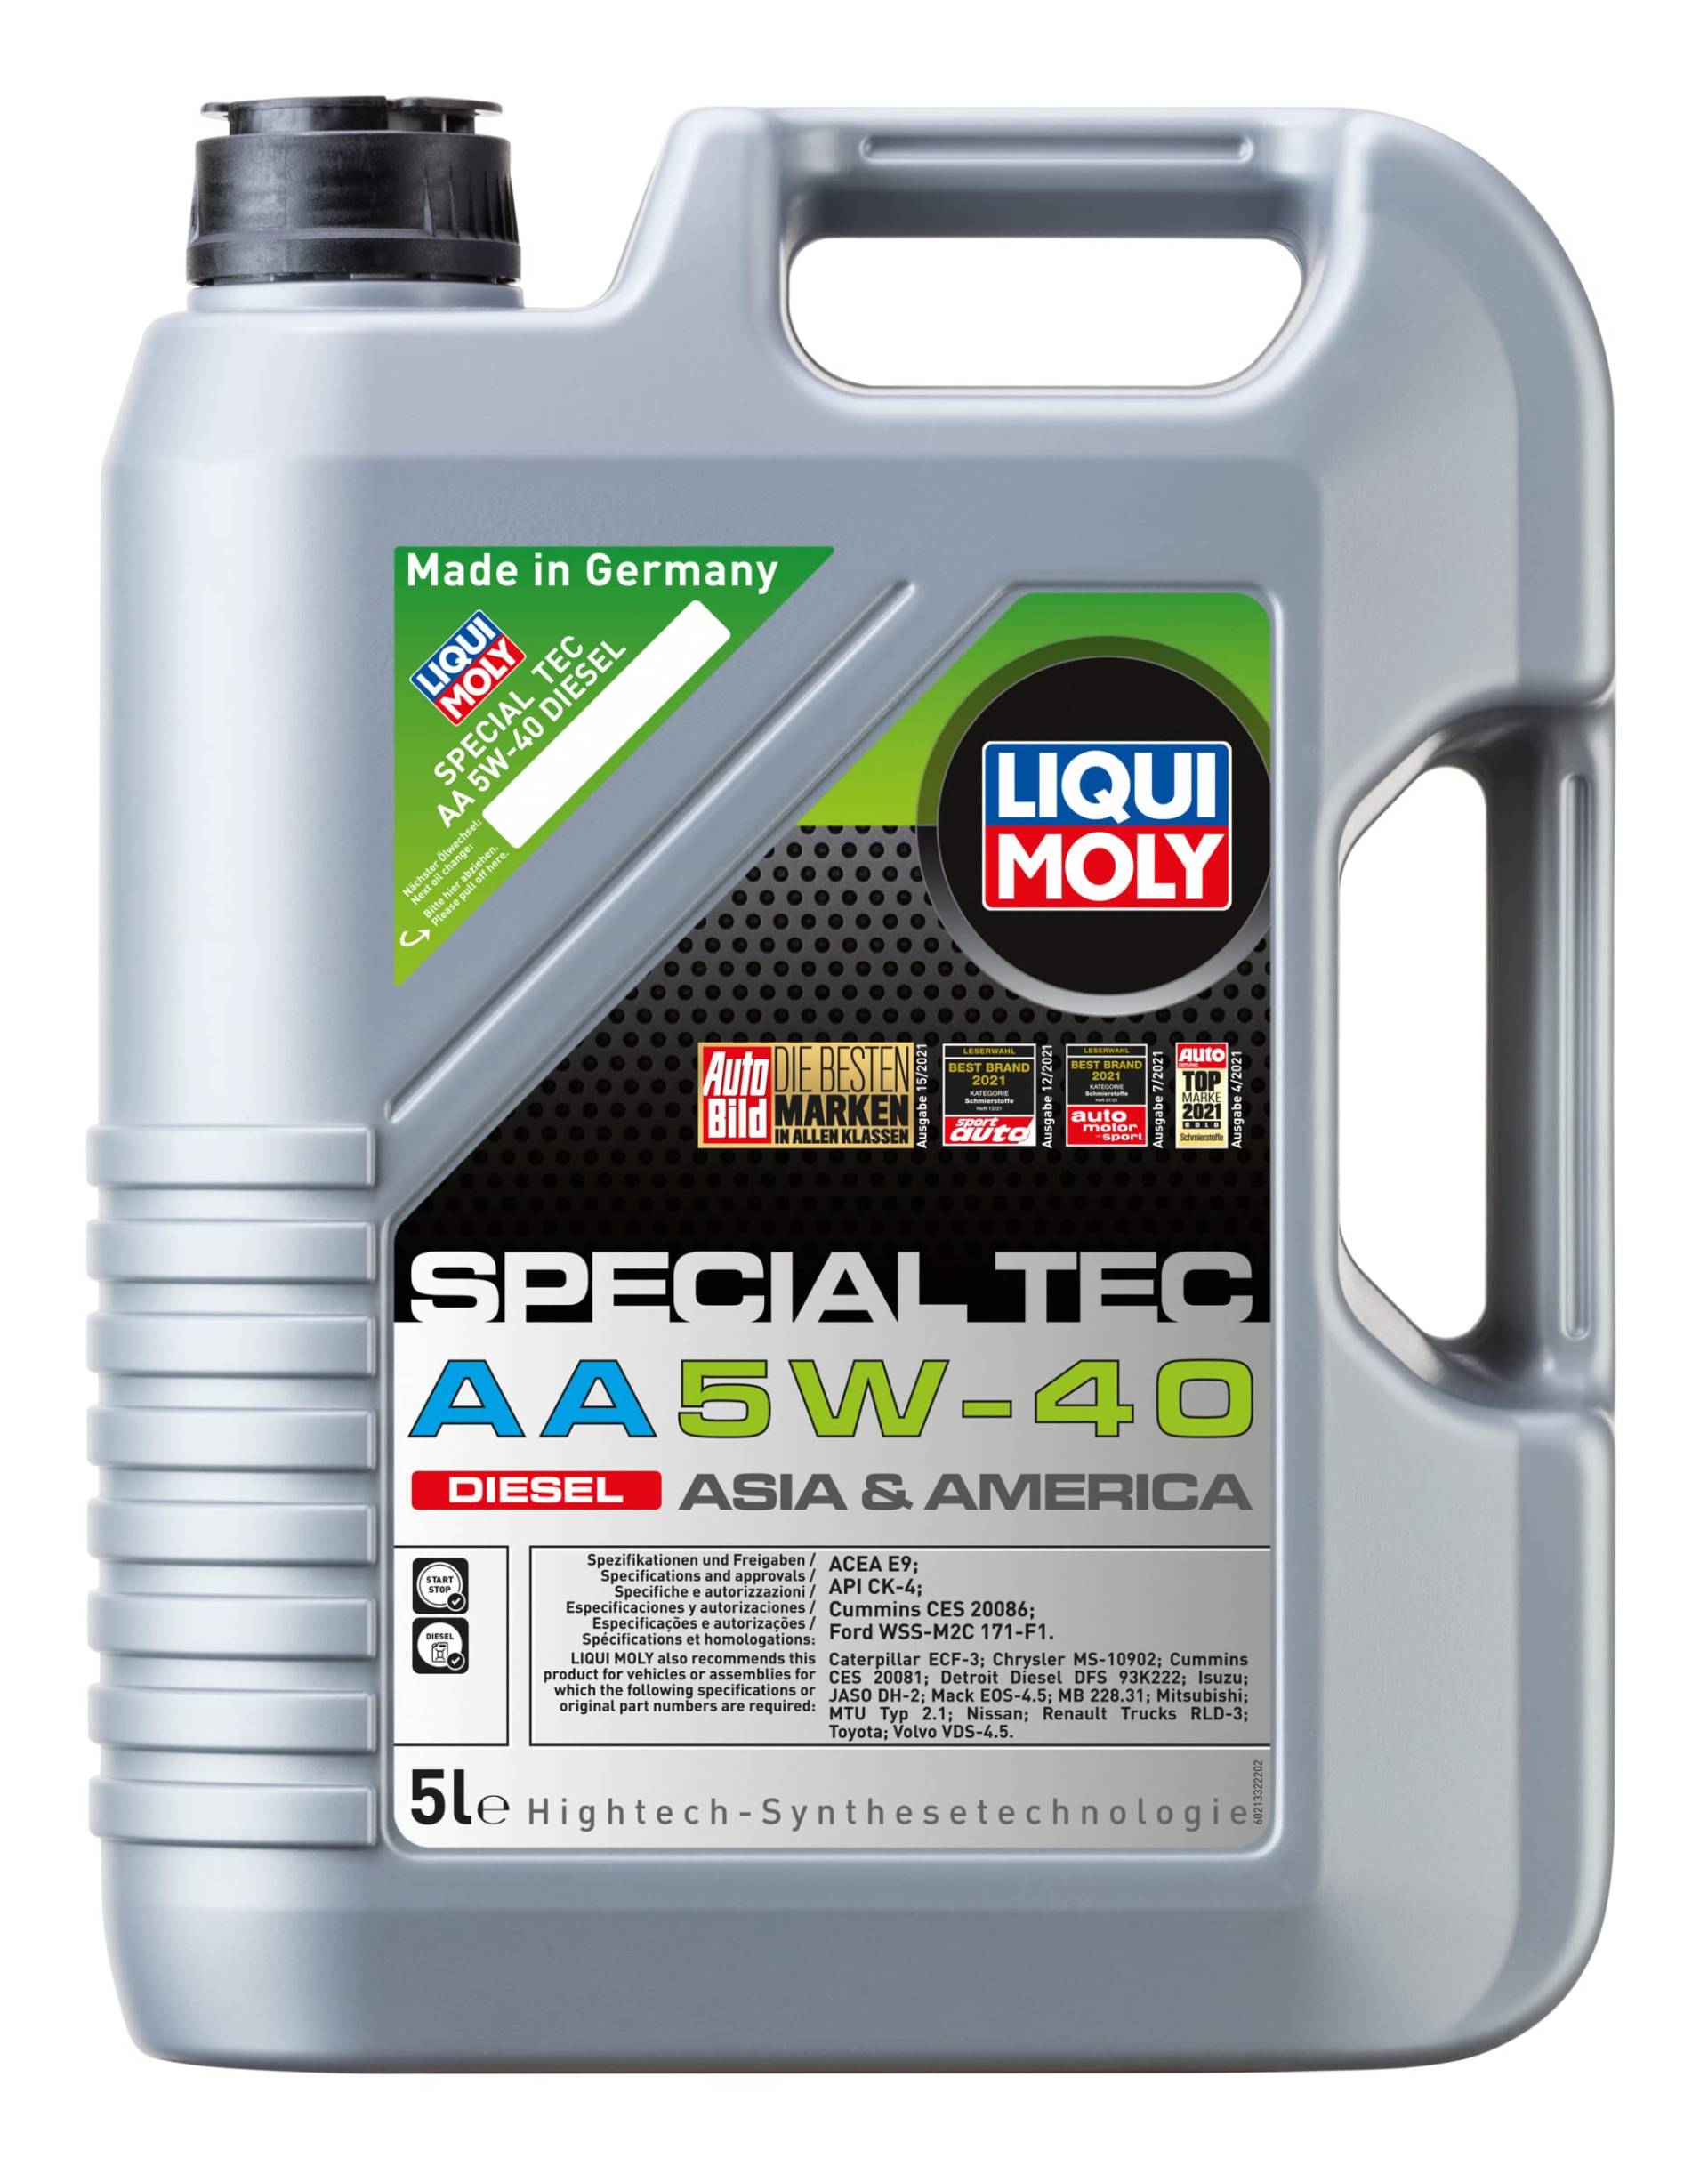 LIQUI MOLY Special Tec AA 5W-40 Diesel | 5 L | Synthesetechnologie Motoröl | Art.-Nr.: 21332 von Liqui Moly